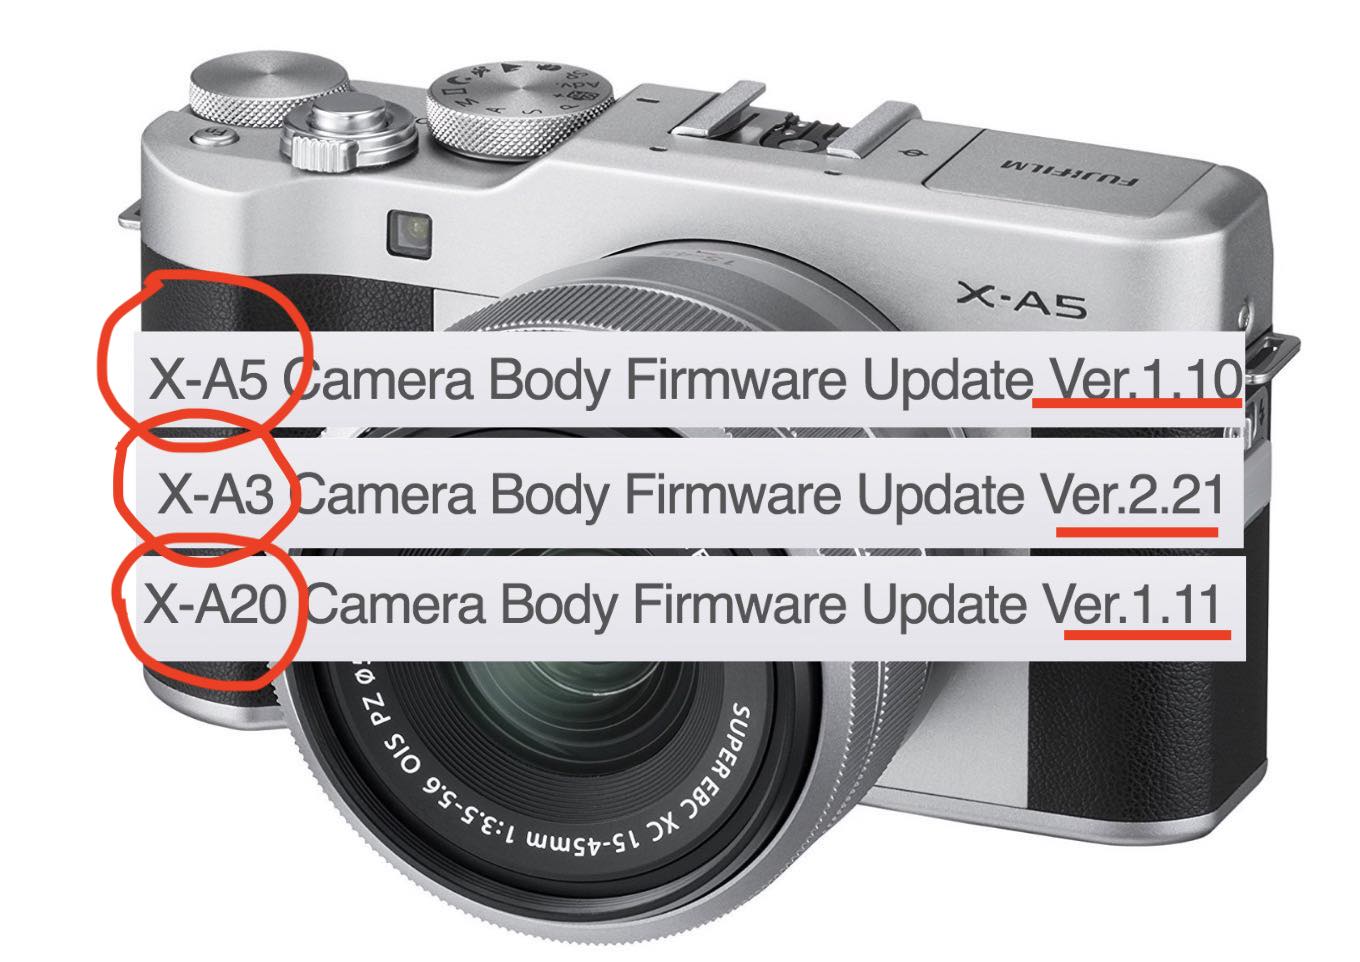 Ciro bedreiging Viool Fujifilm X-A5, X-A3 and X-A20 Firmware Updates Released - Fuji Rumors